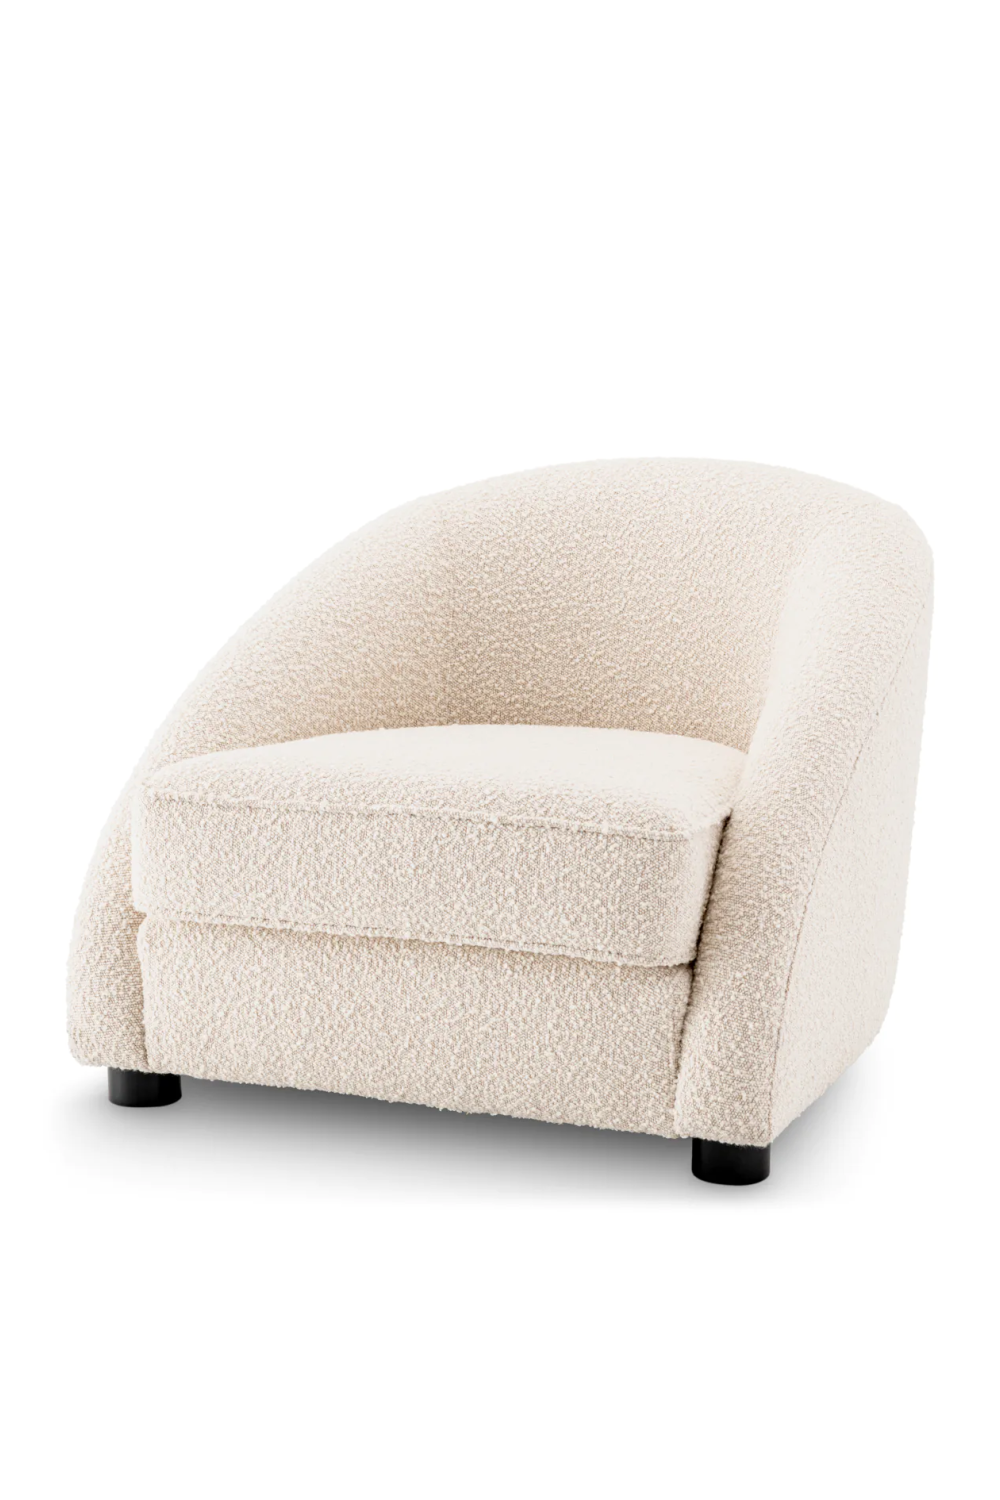 Bouclé Cream Accent Chair | Eichholtz Cruz | Oroa.com